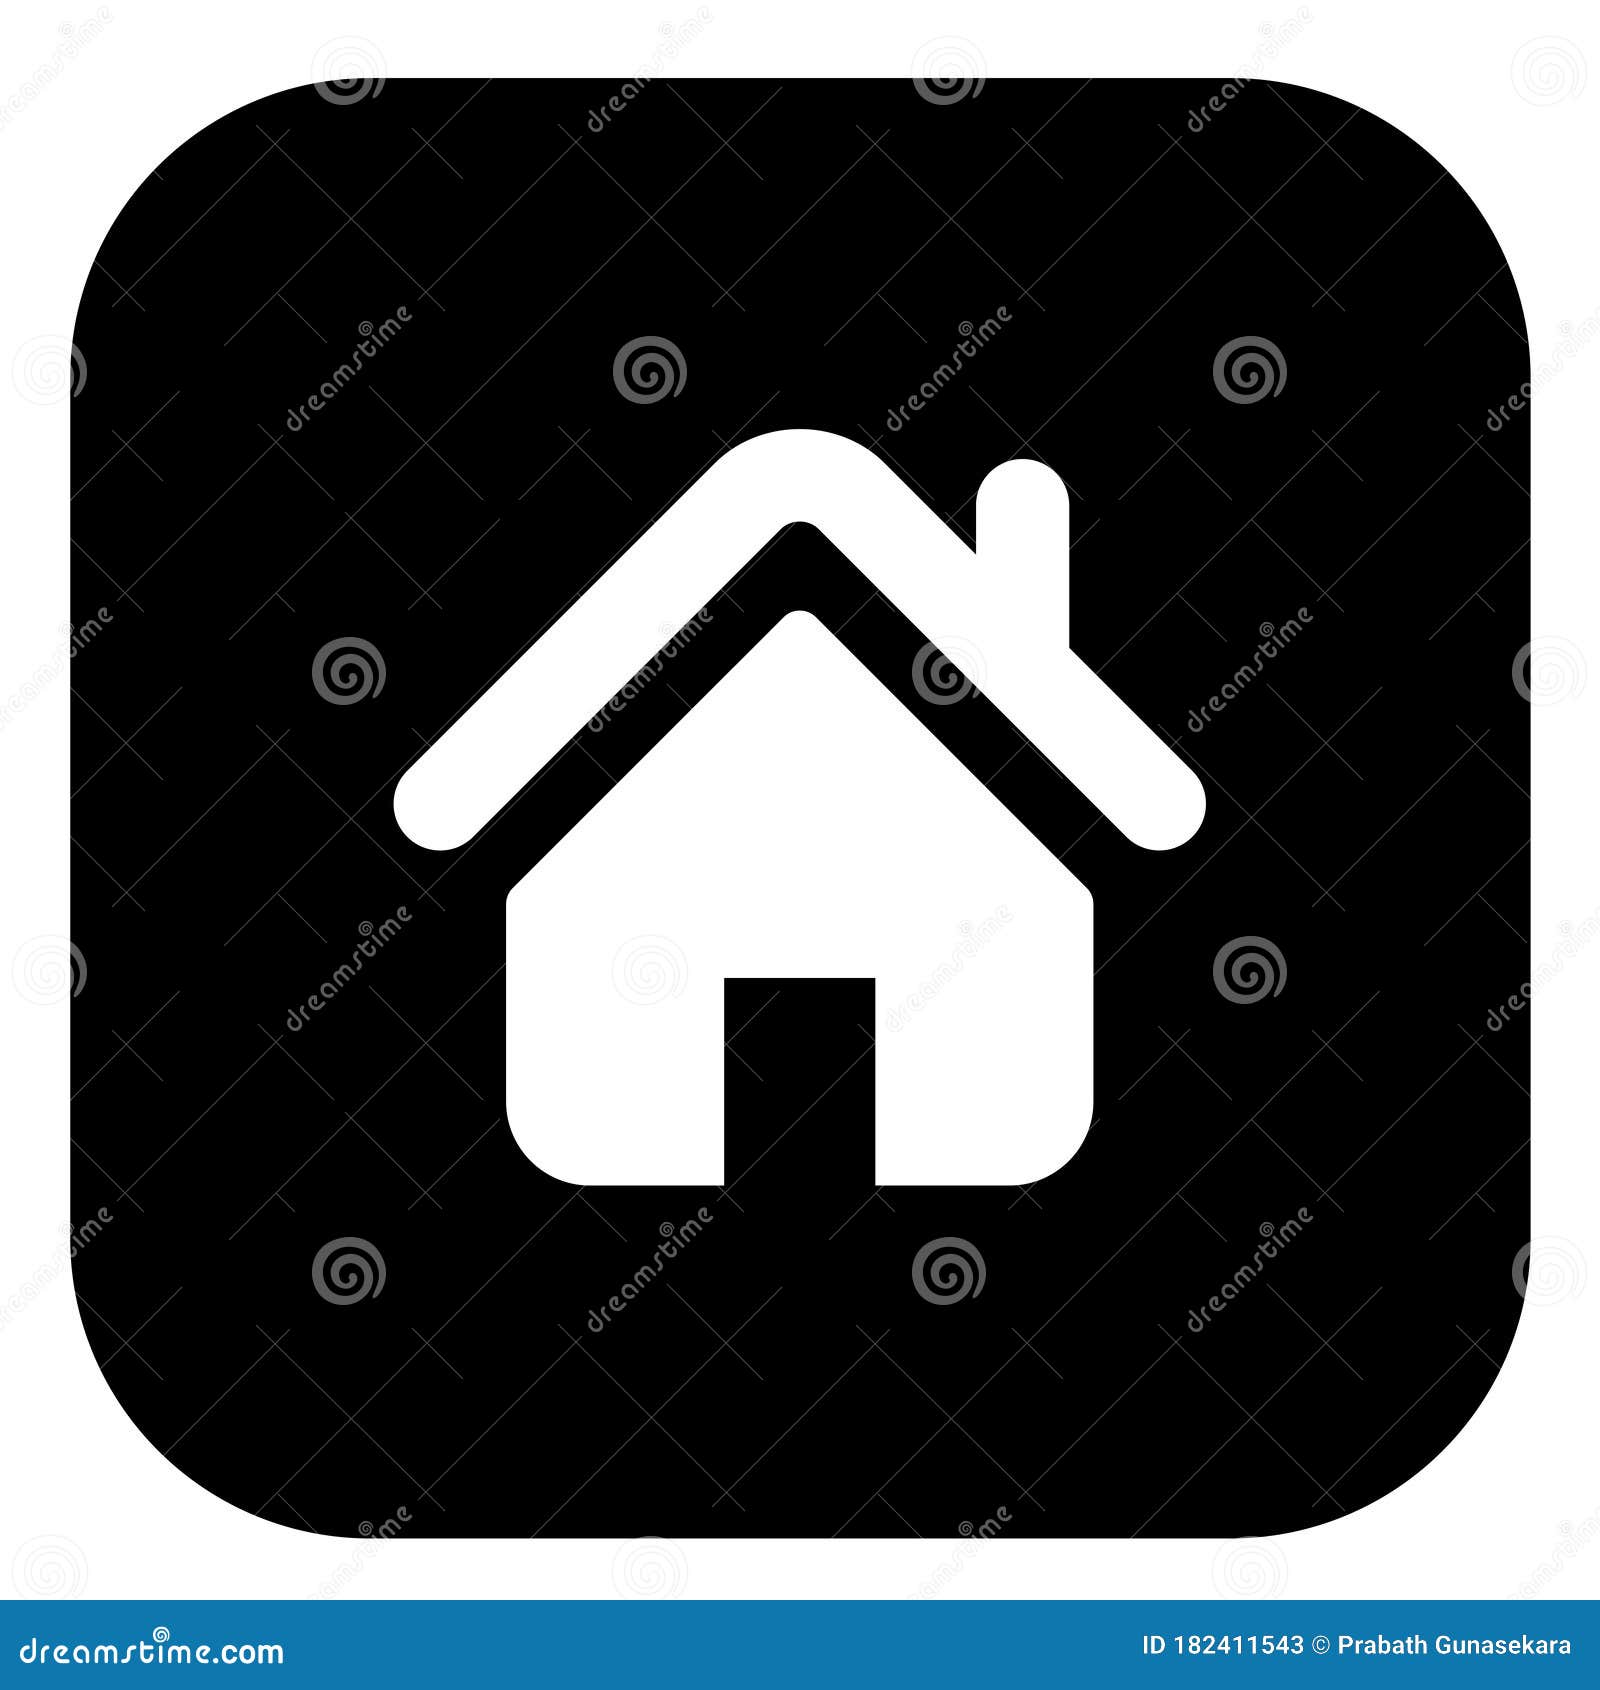 black & white home icon for websites